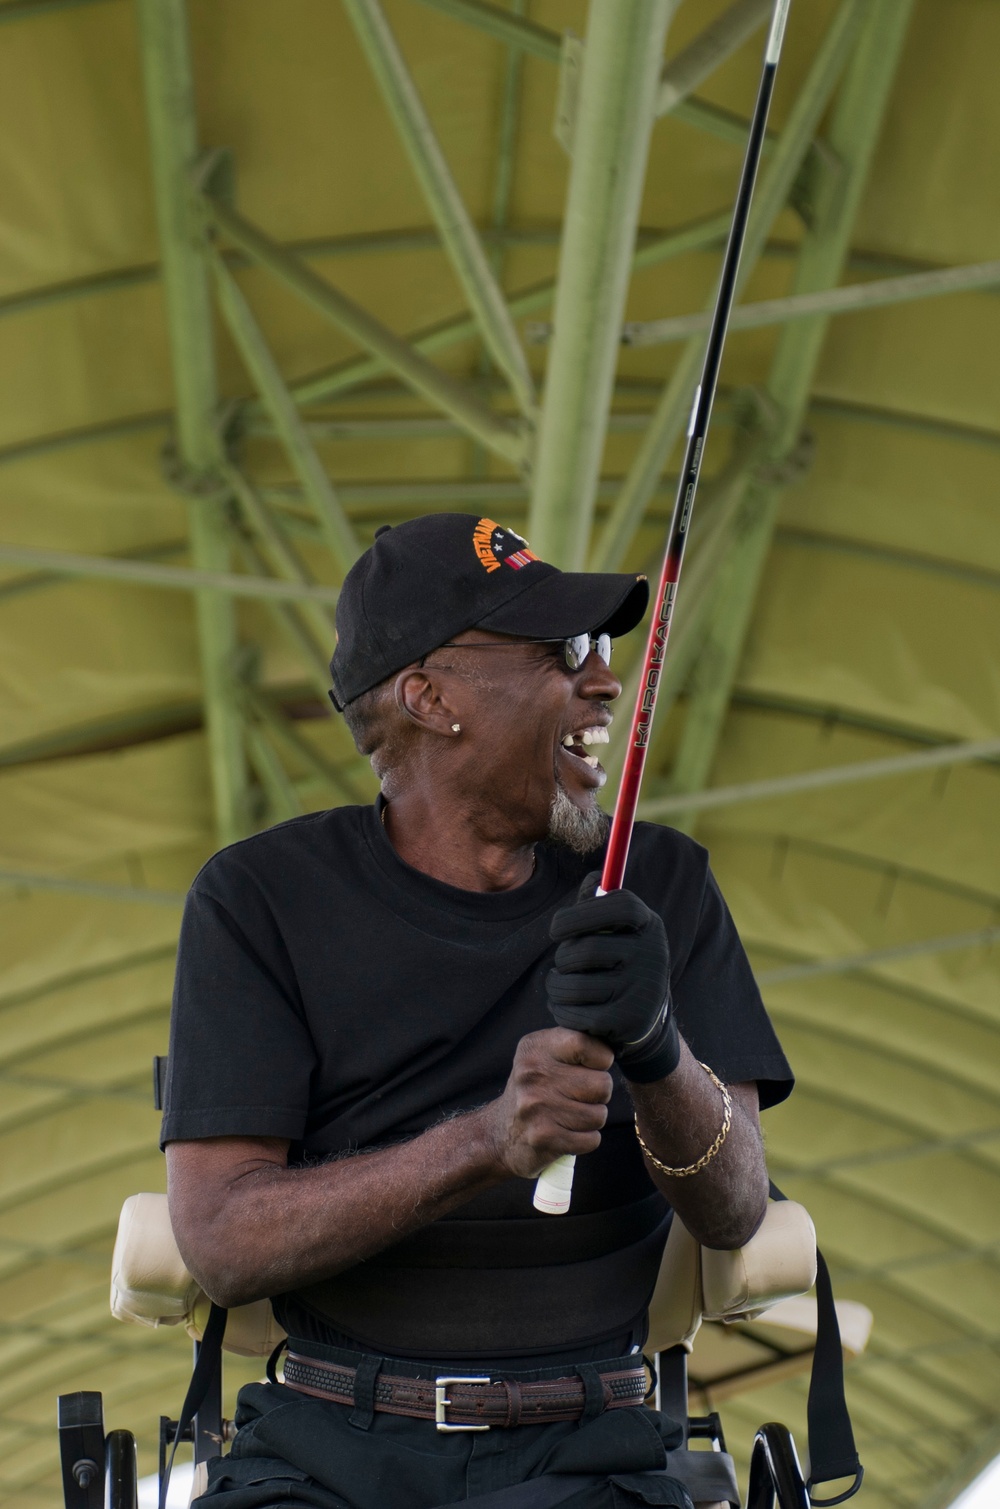 Disabled veterans discover ‘Hope’ through golf program